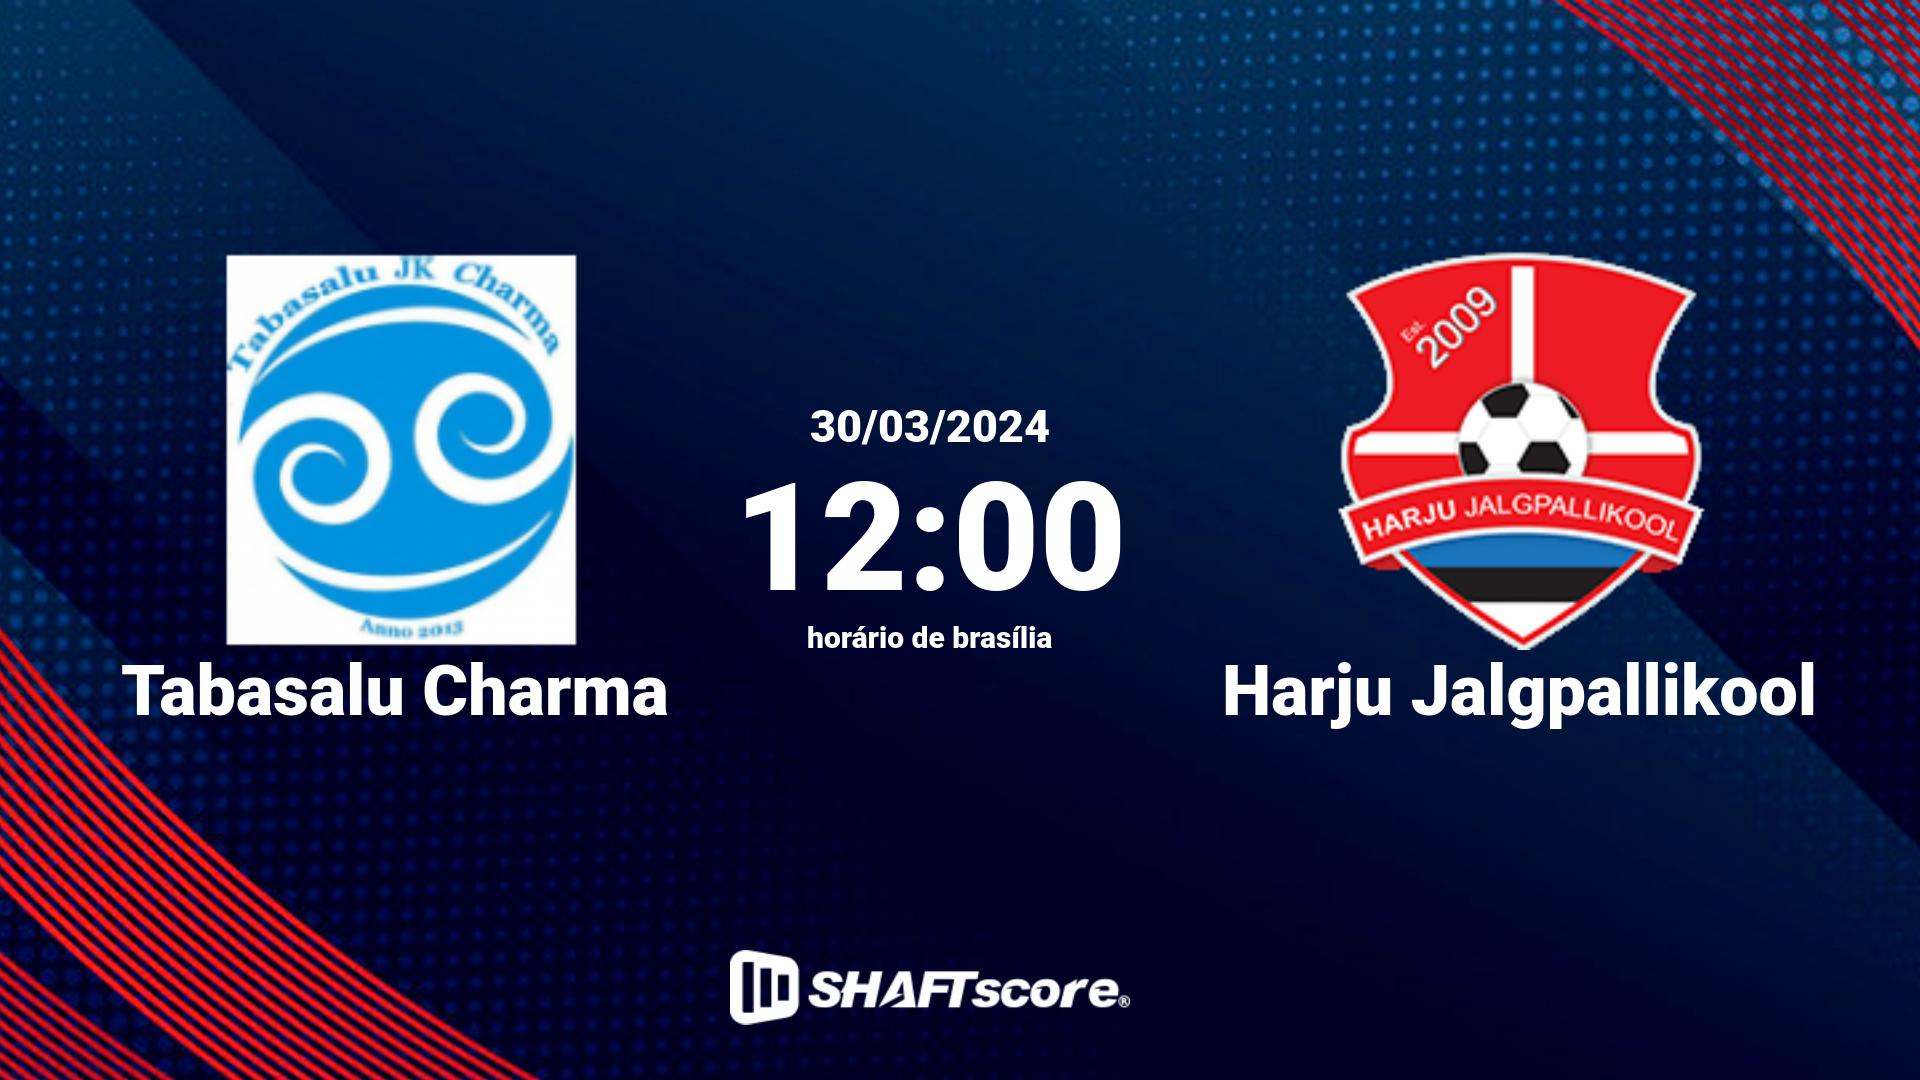 Estatísticas do jogo Tabasalu Charma vs Harju Jalgpallikool 30.03 12:00